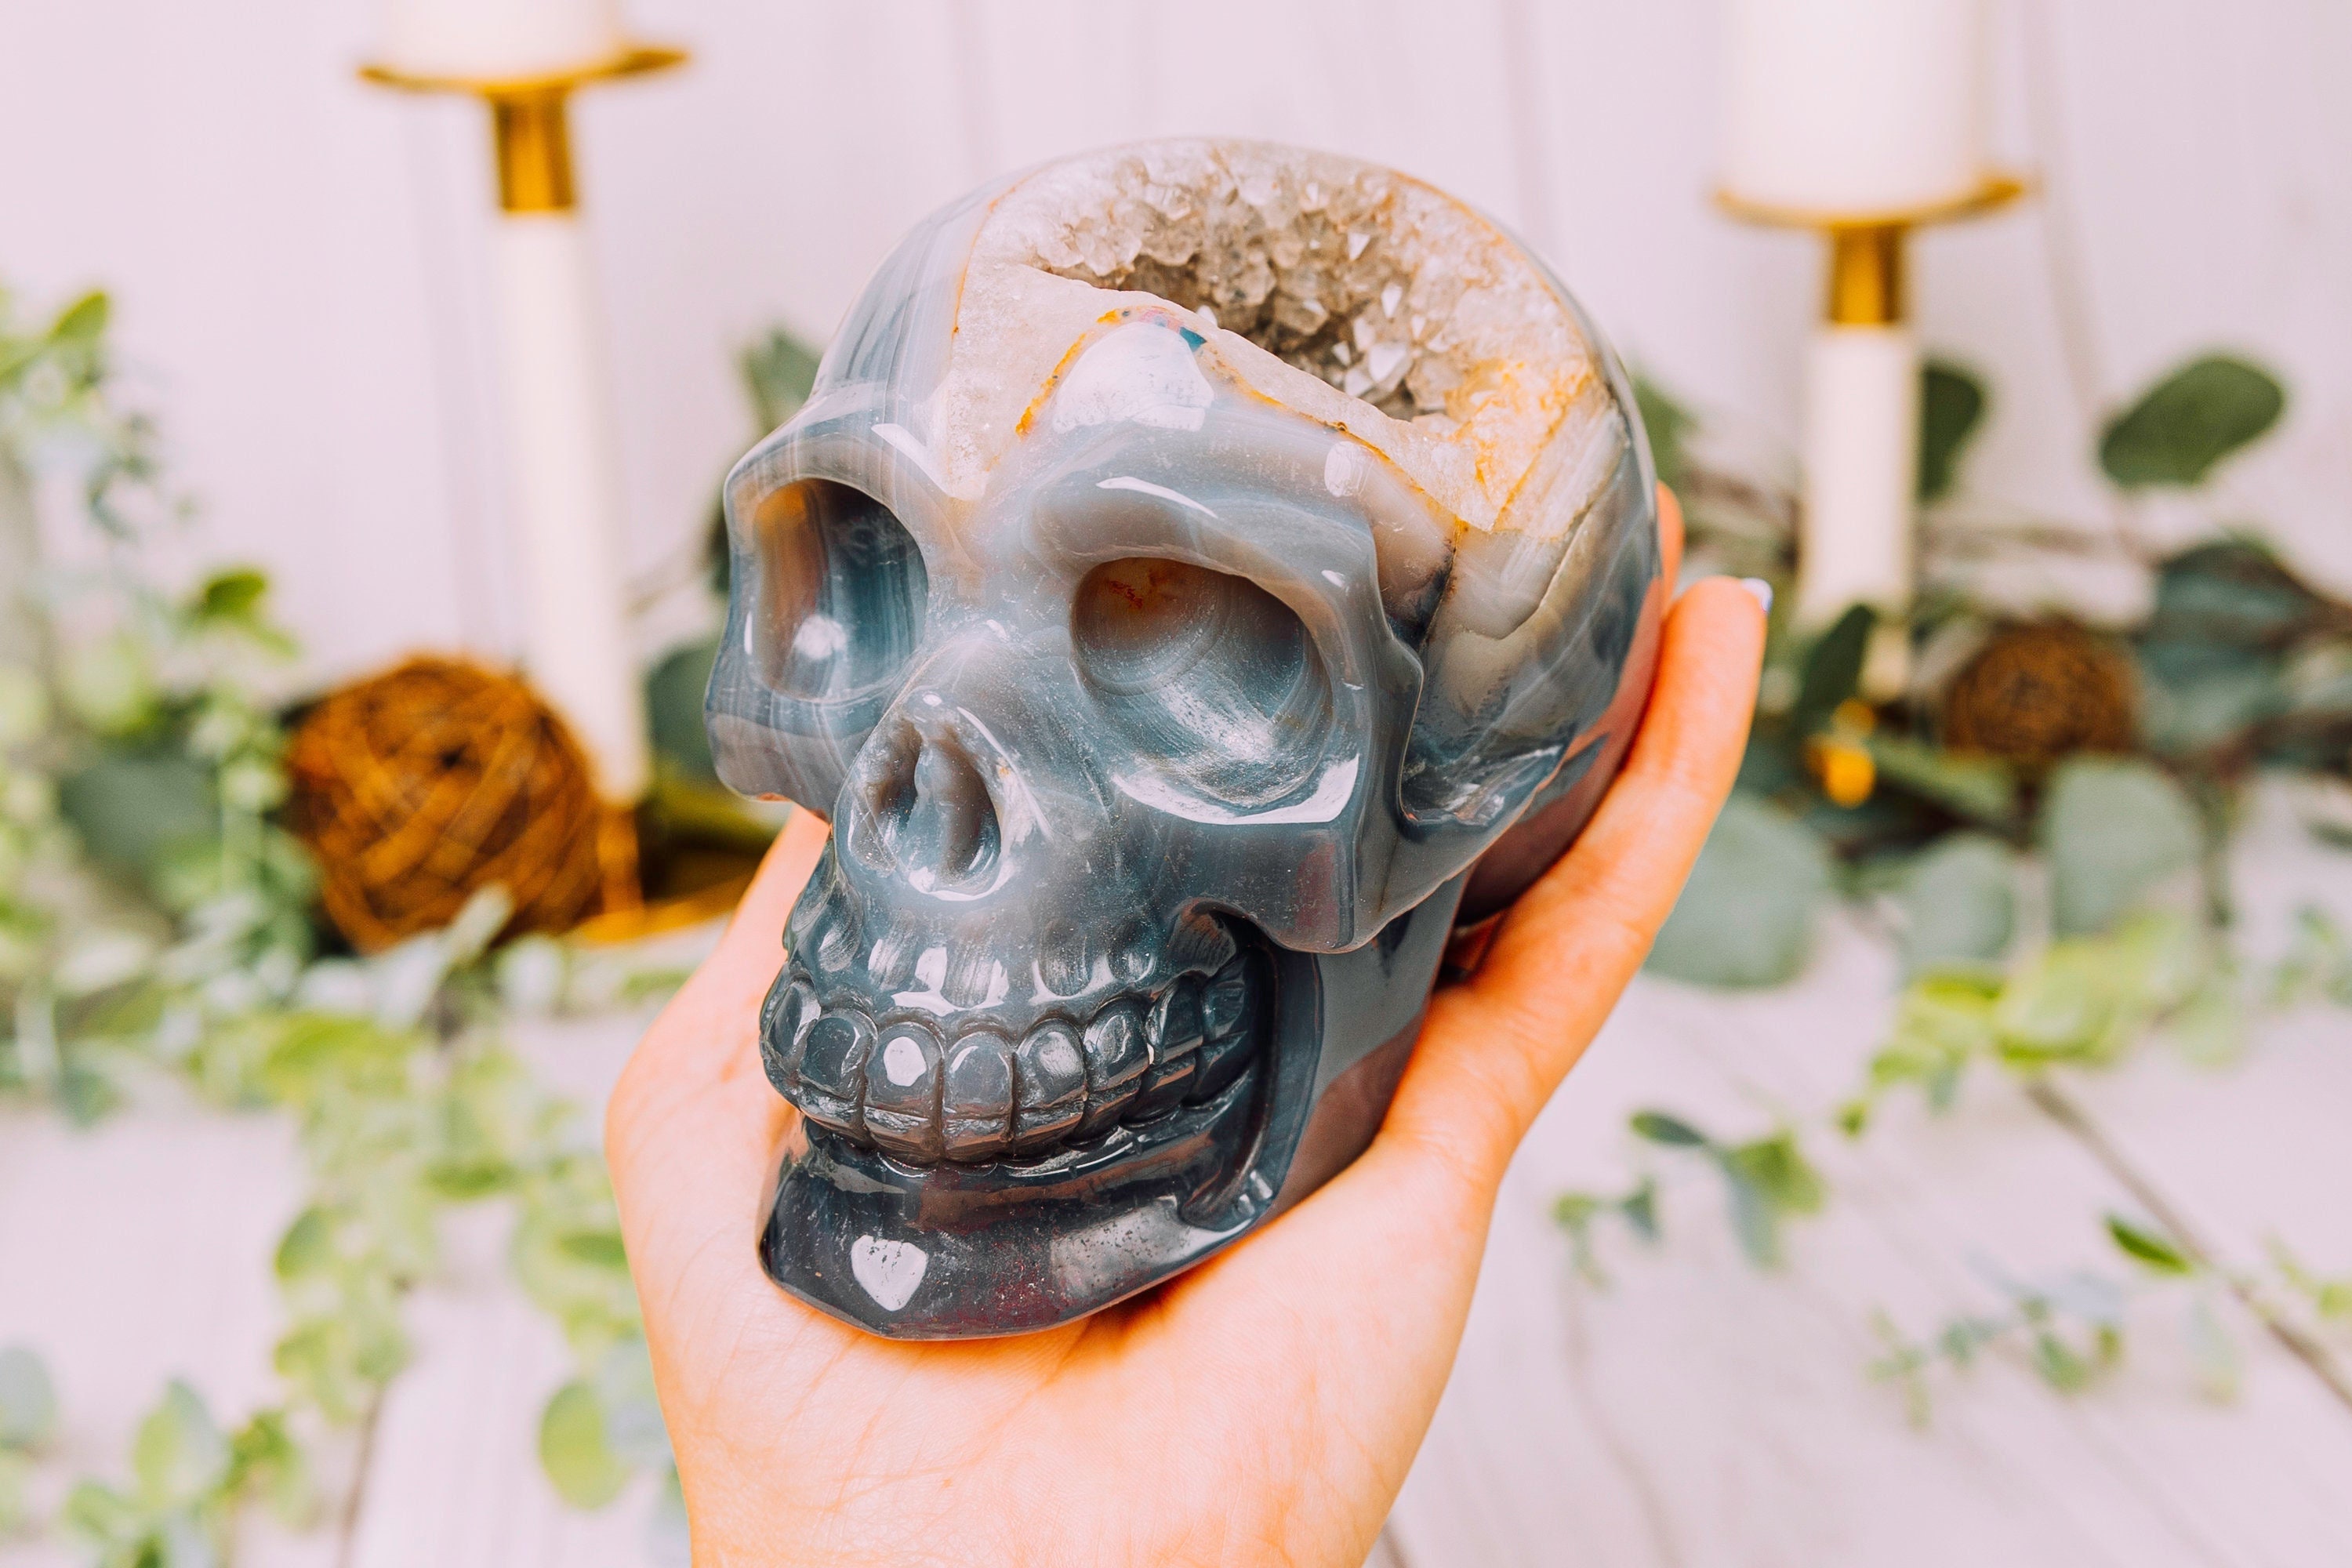 Amazing Clear Huge 5.1 Quartz Rock Crystal Carved Crystal Skull Coffee  Mug, Cup, 6.3 OZ Crystal Healing